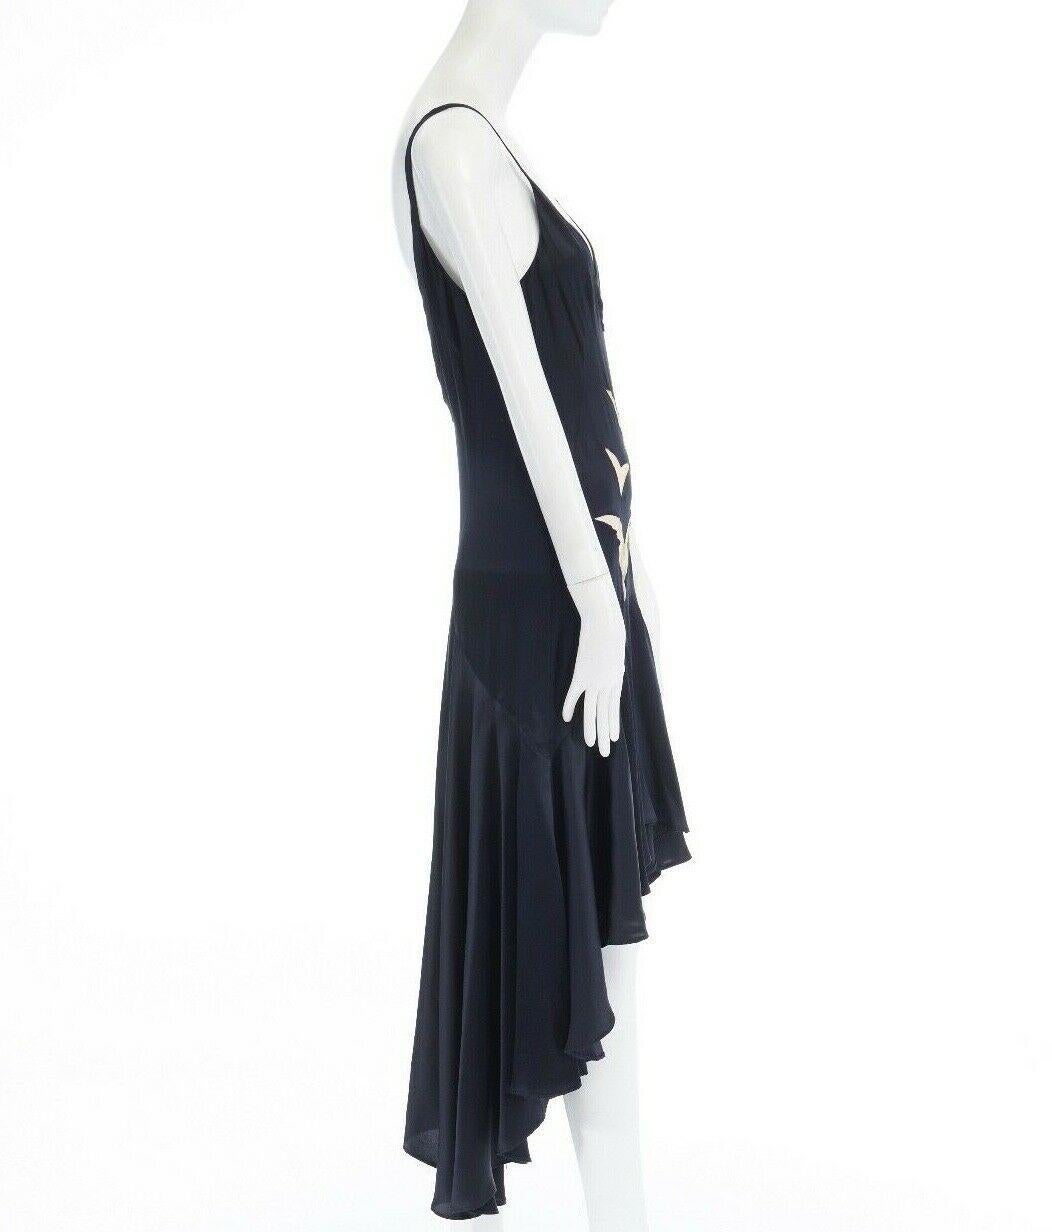 Women's ALEXANDER MCQUEEN Vintage SS97 black sheer mesh bird silk dress M IT42 US6